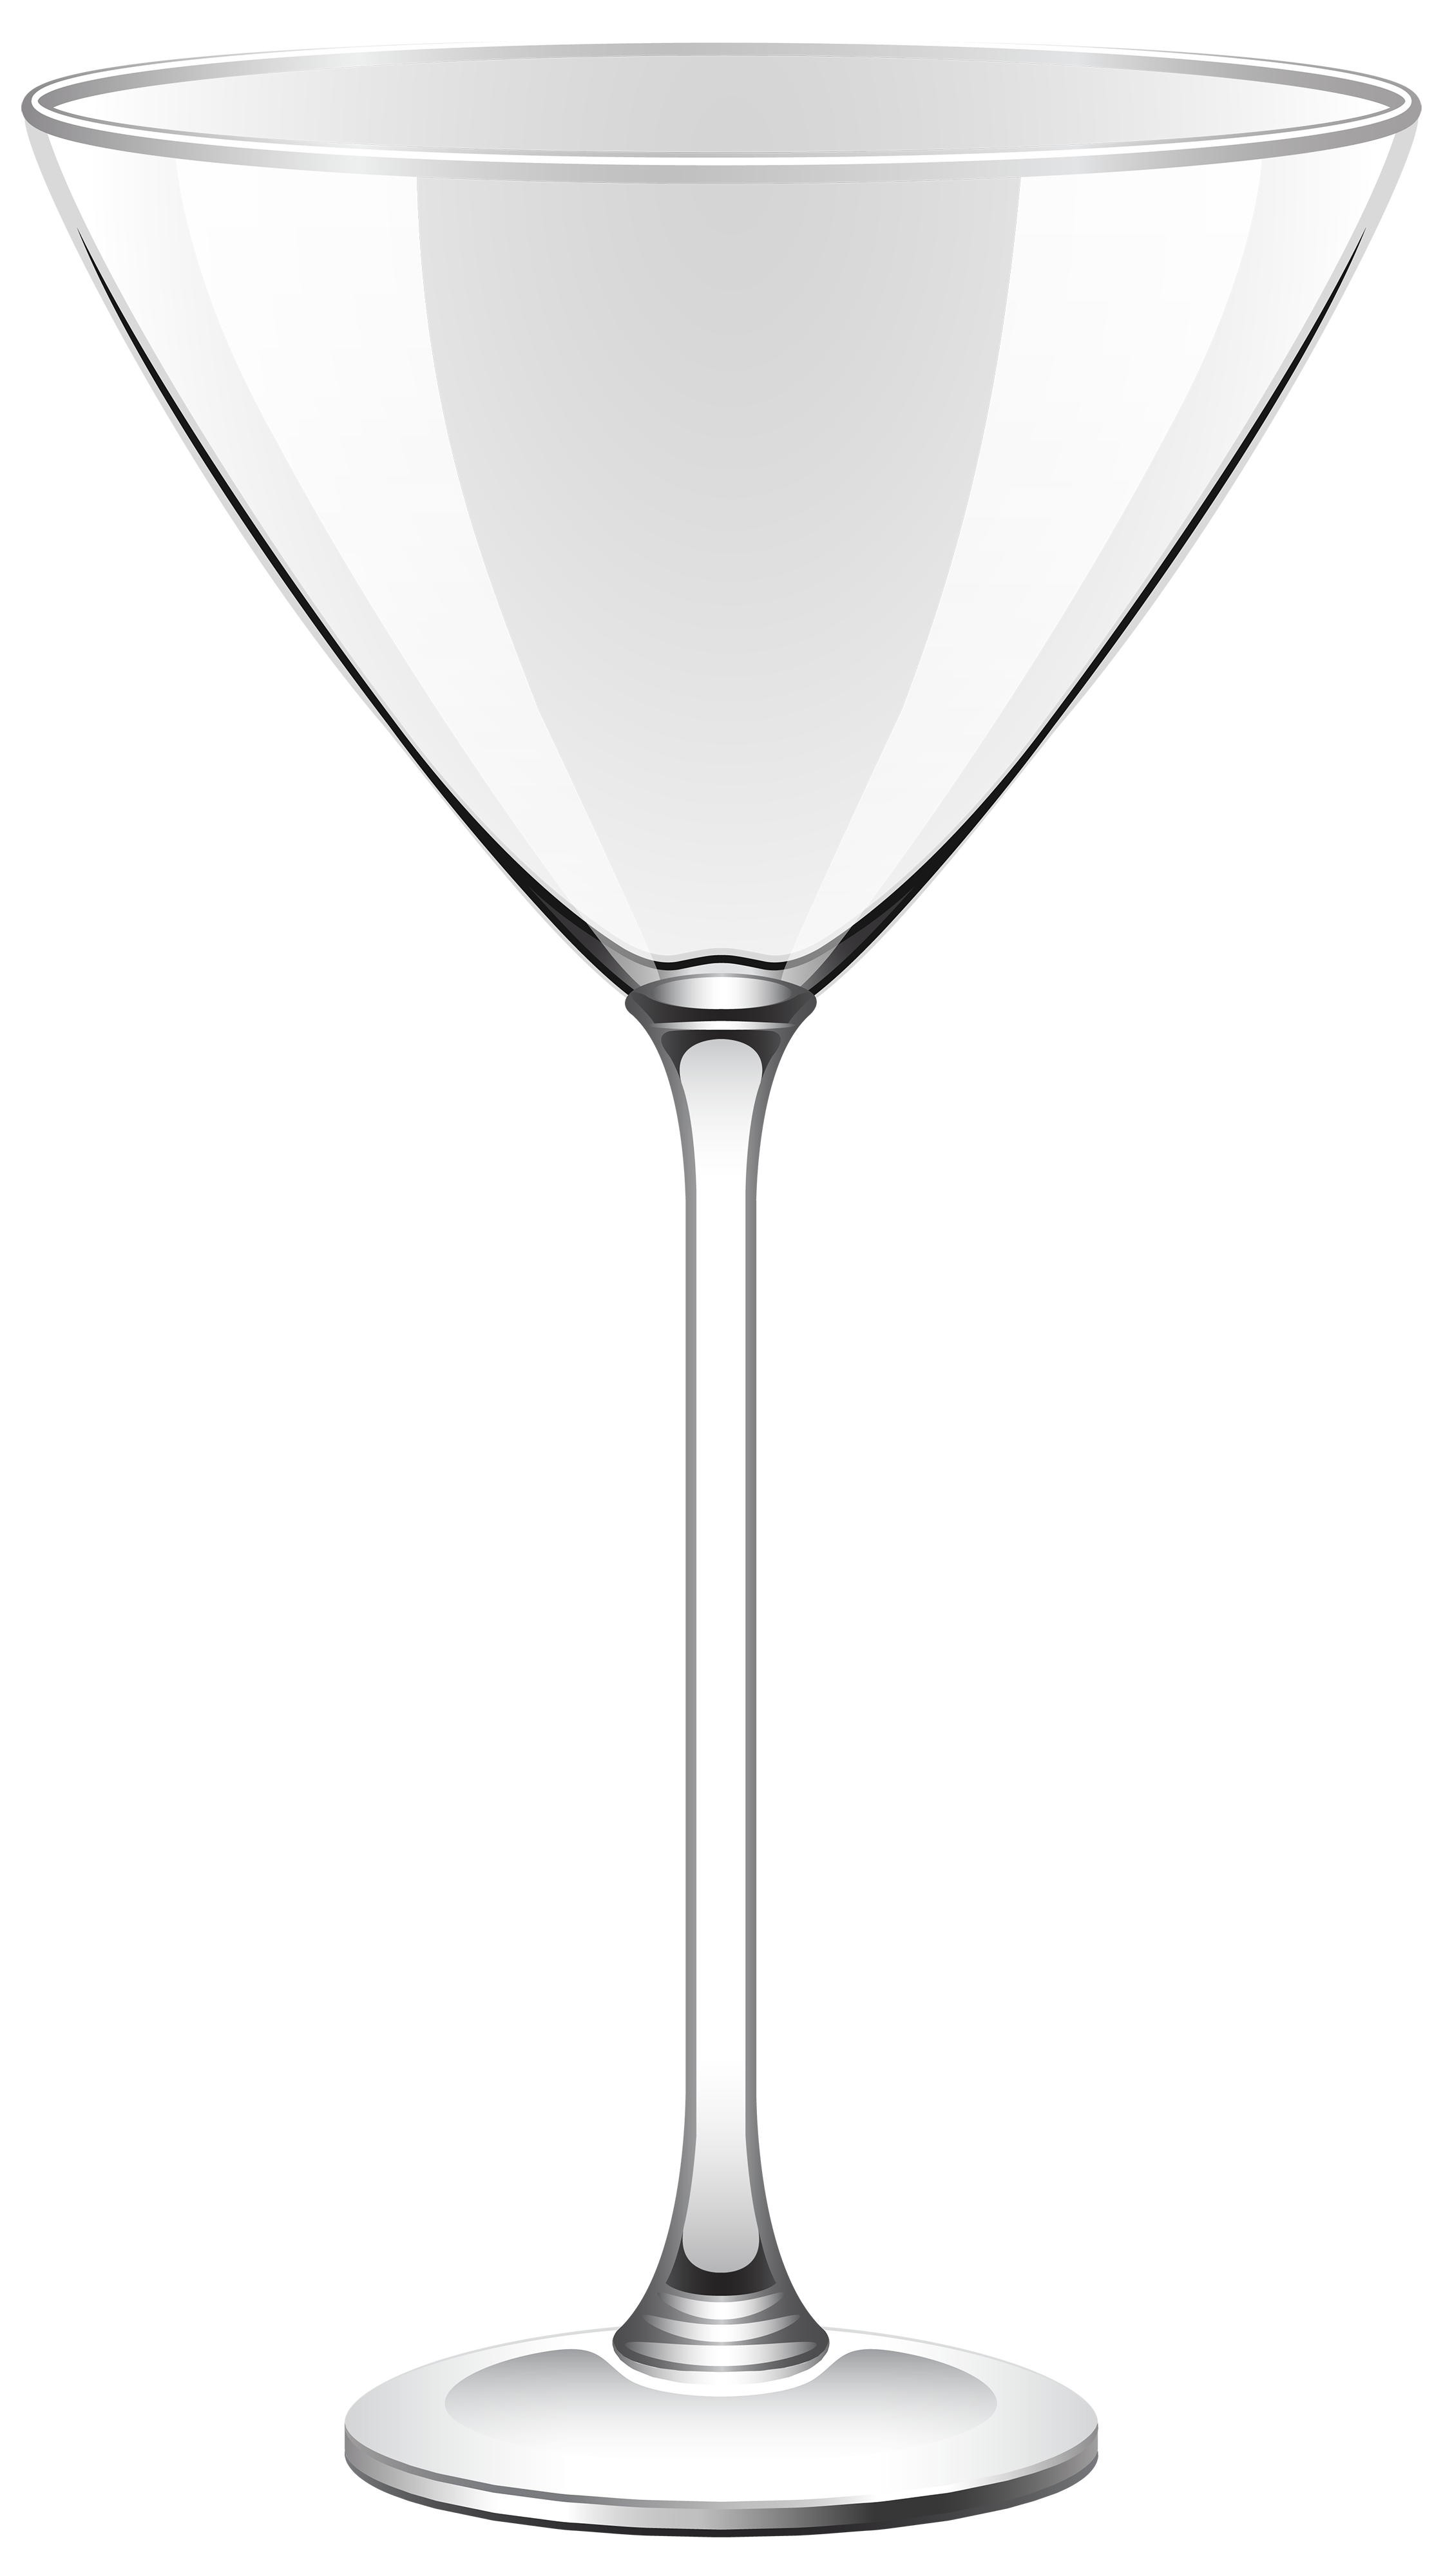 Martini glass transparent cocktail glass clipart web clipart